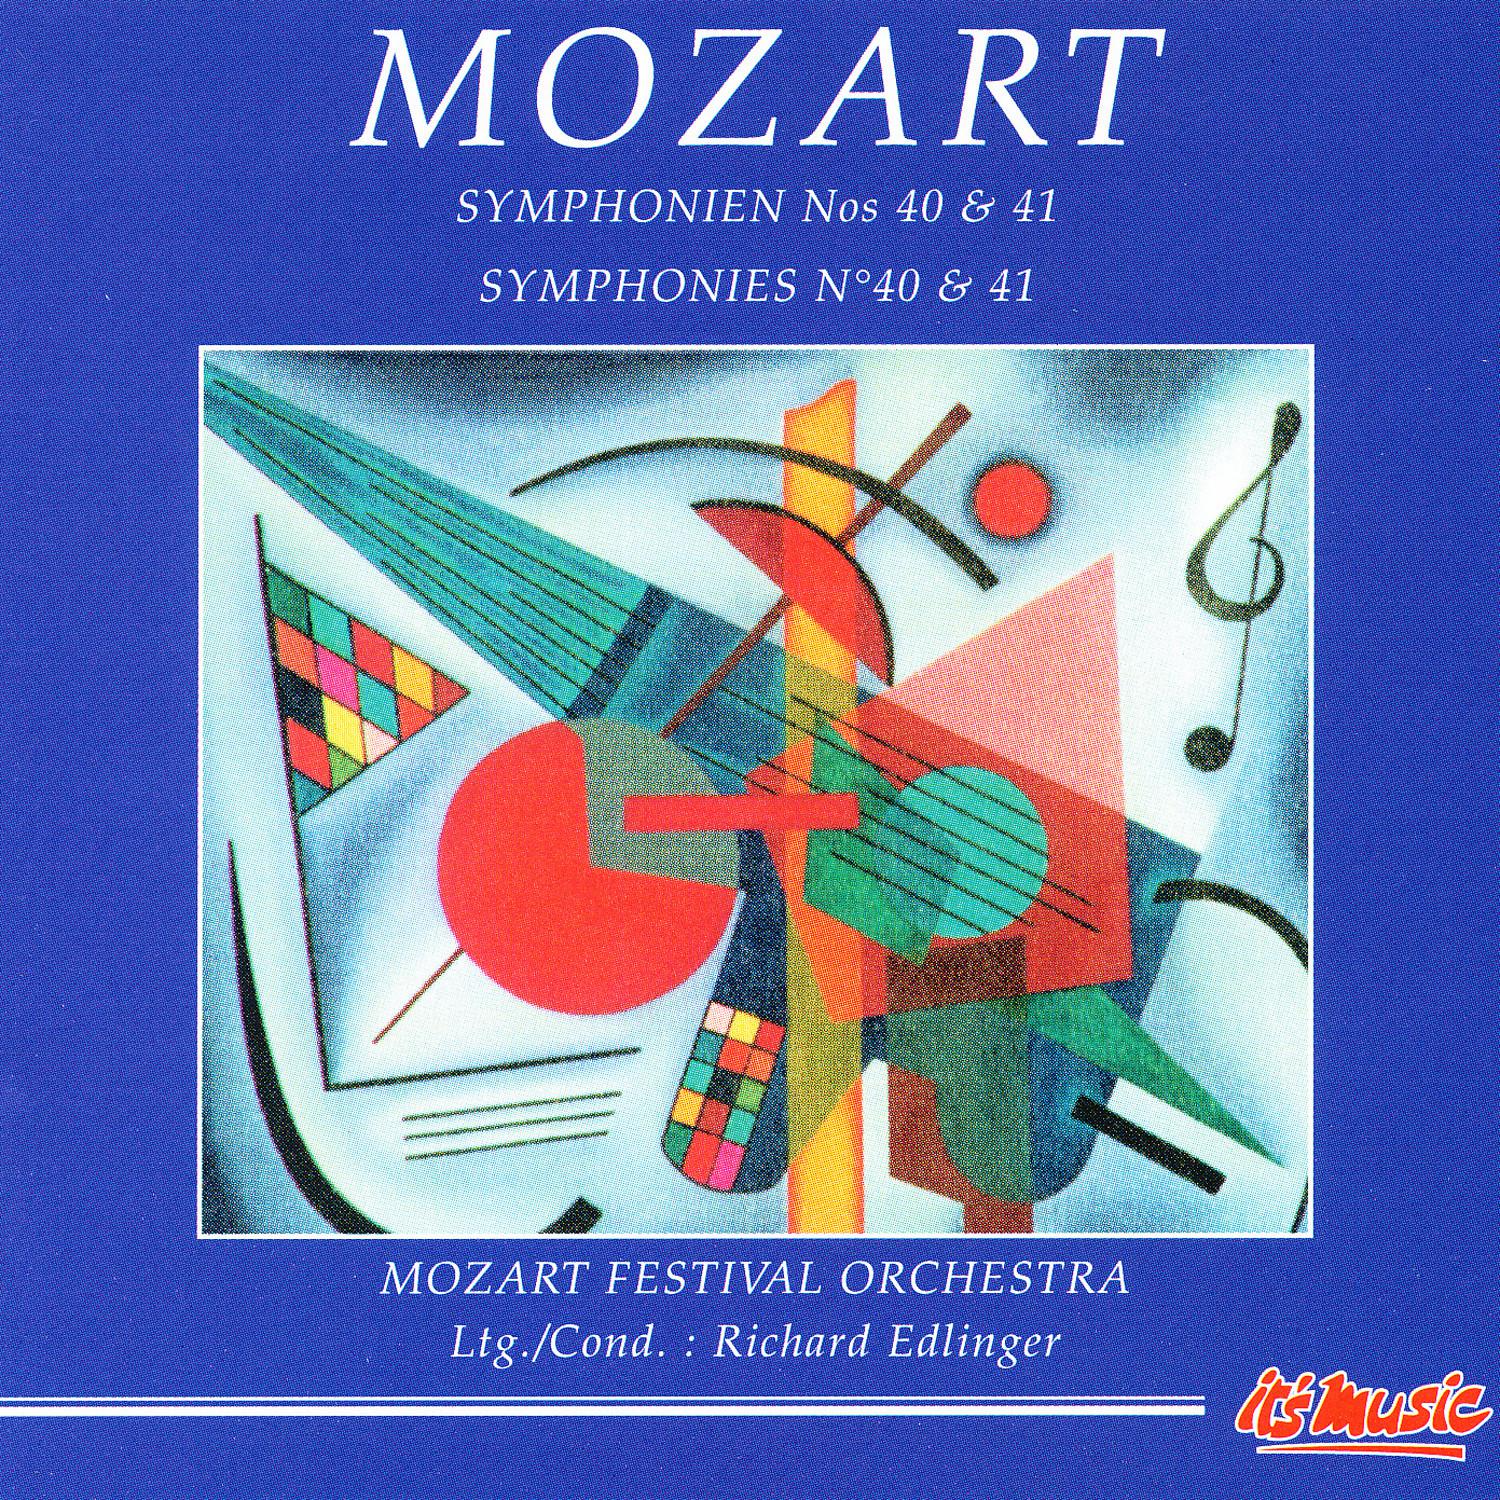 Symphonie No 40 KV 550 G-Moll; Finale: Allegro assai